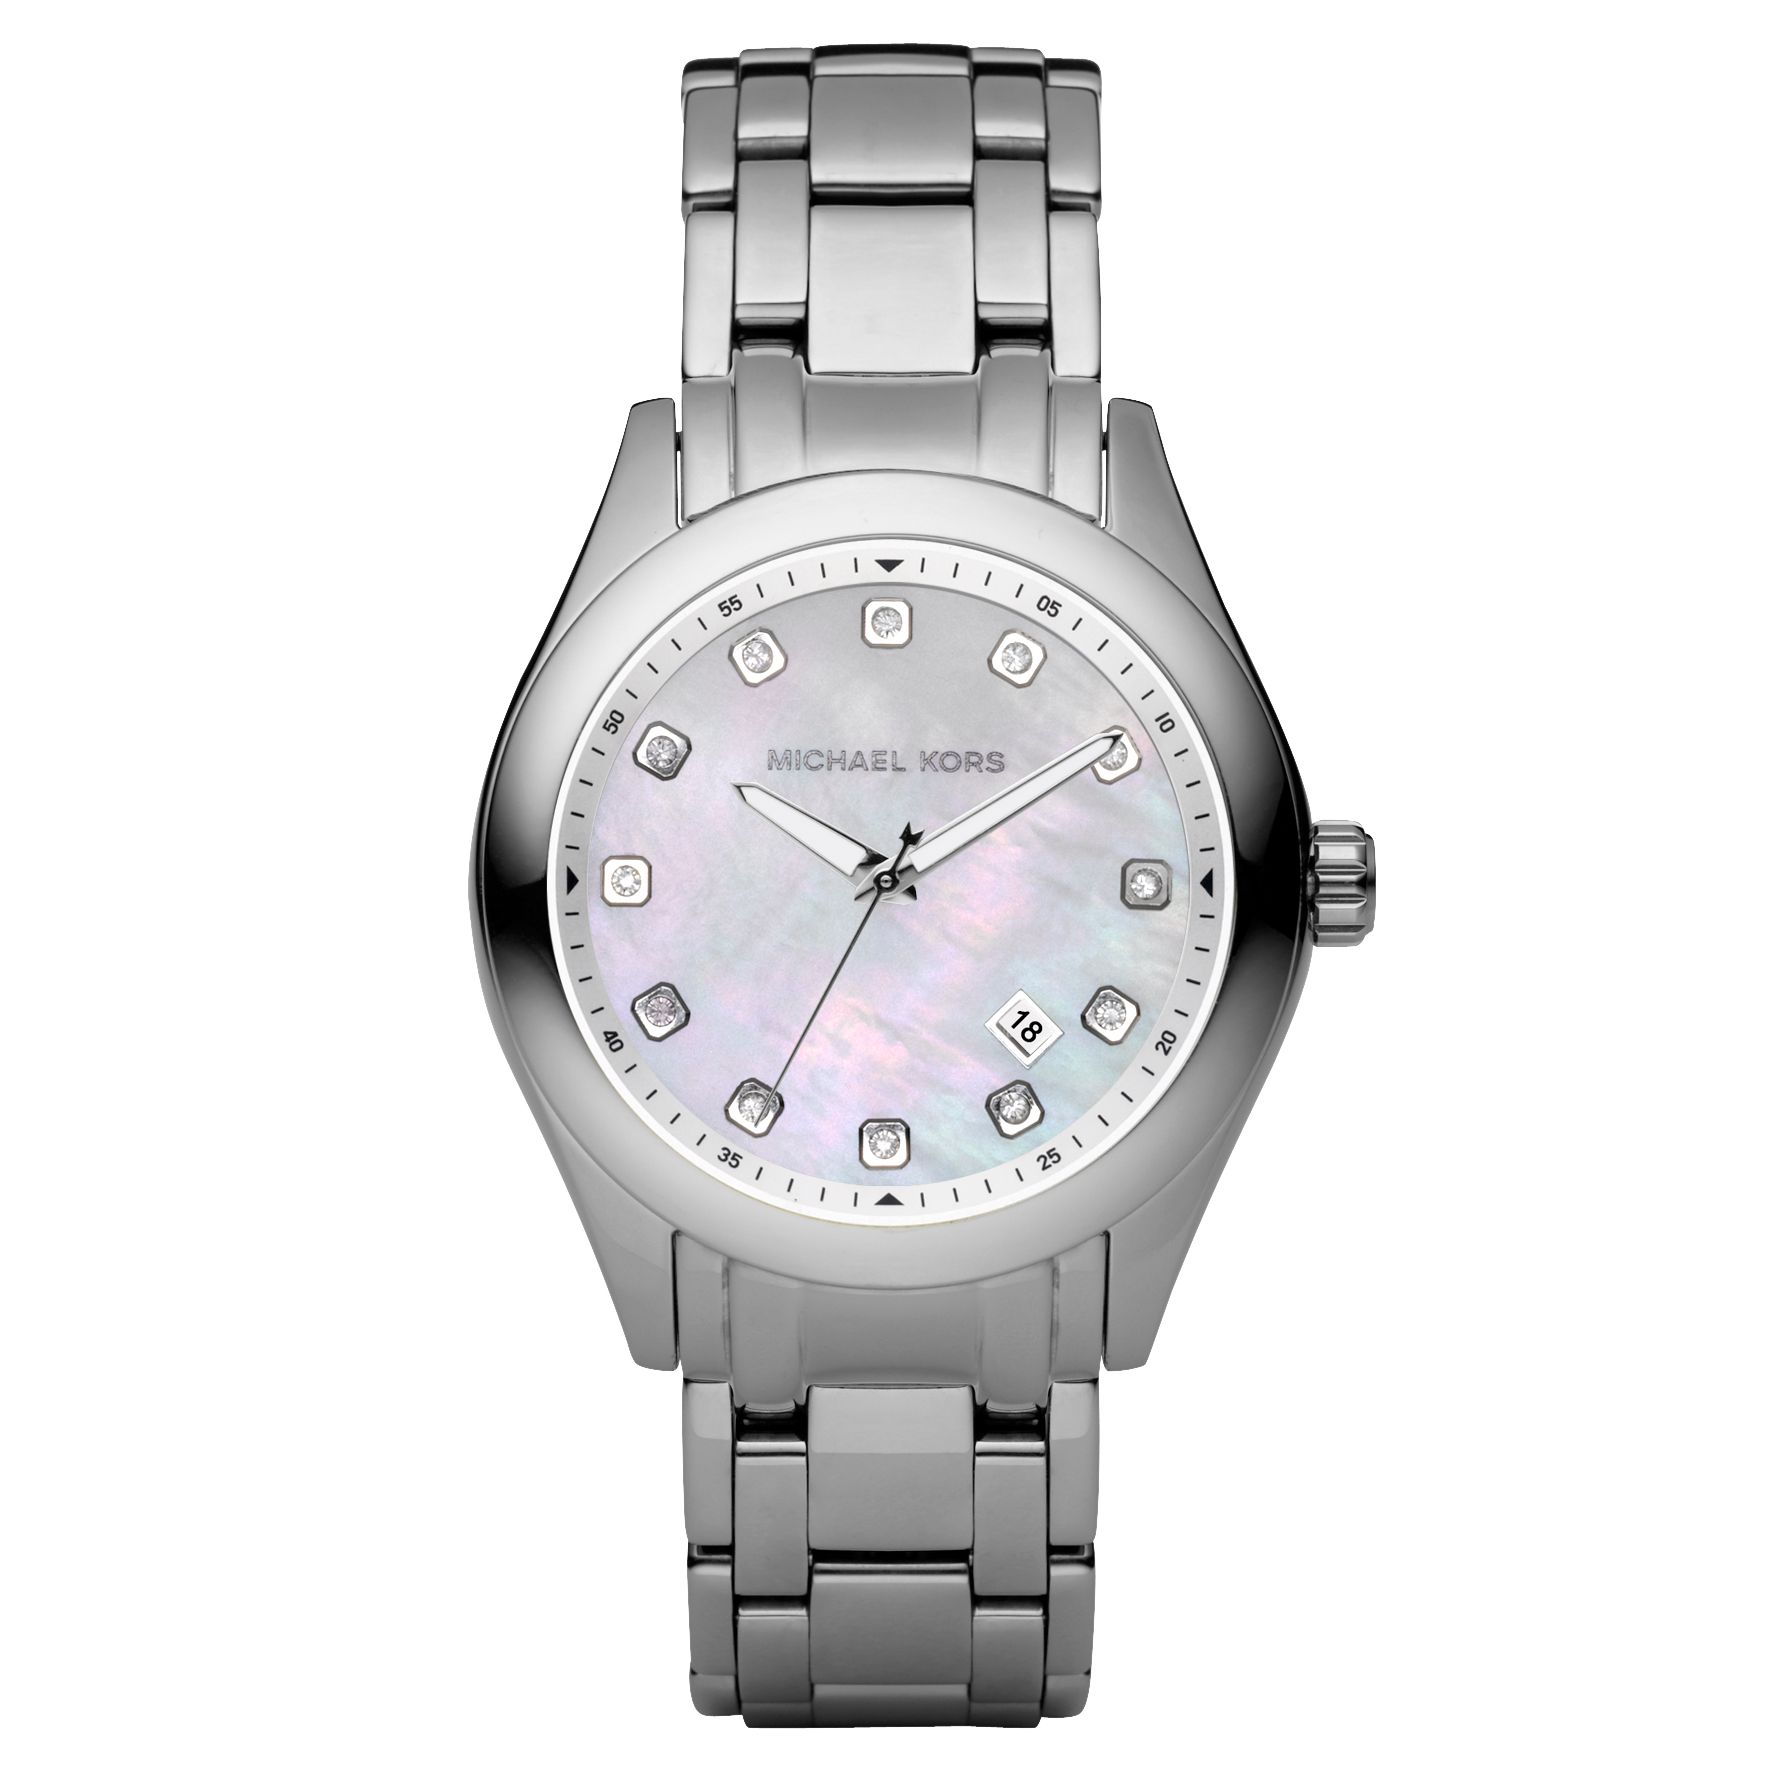 Michael Kors MK5325 Women's Round Dial Stainless Steel Bracelet Watch at John Lewis